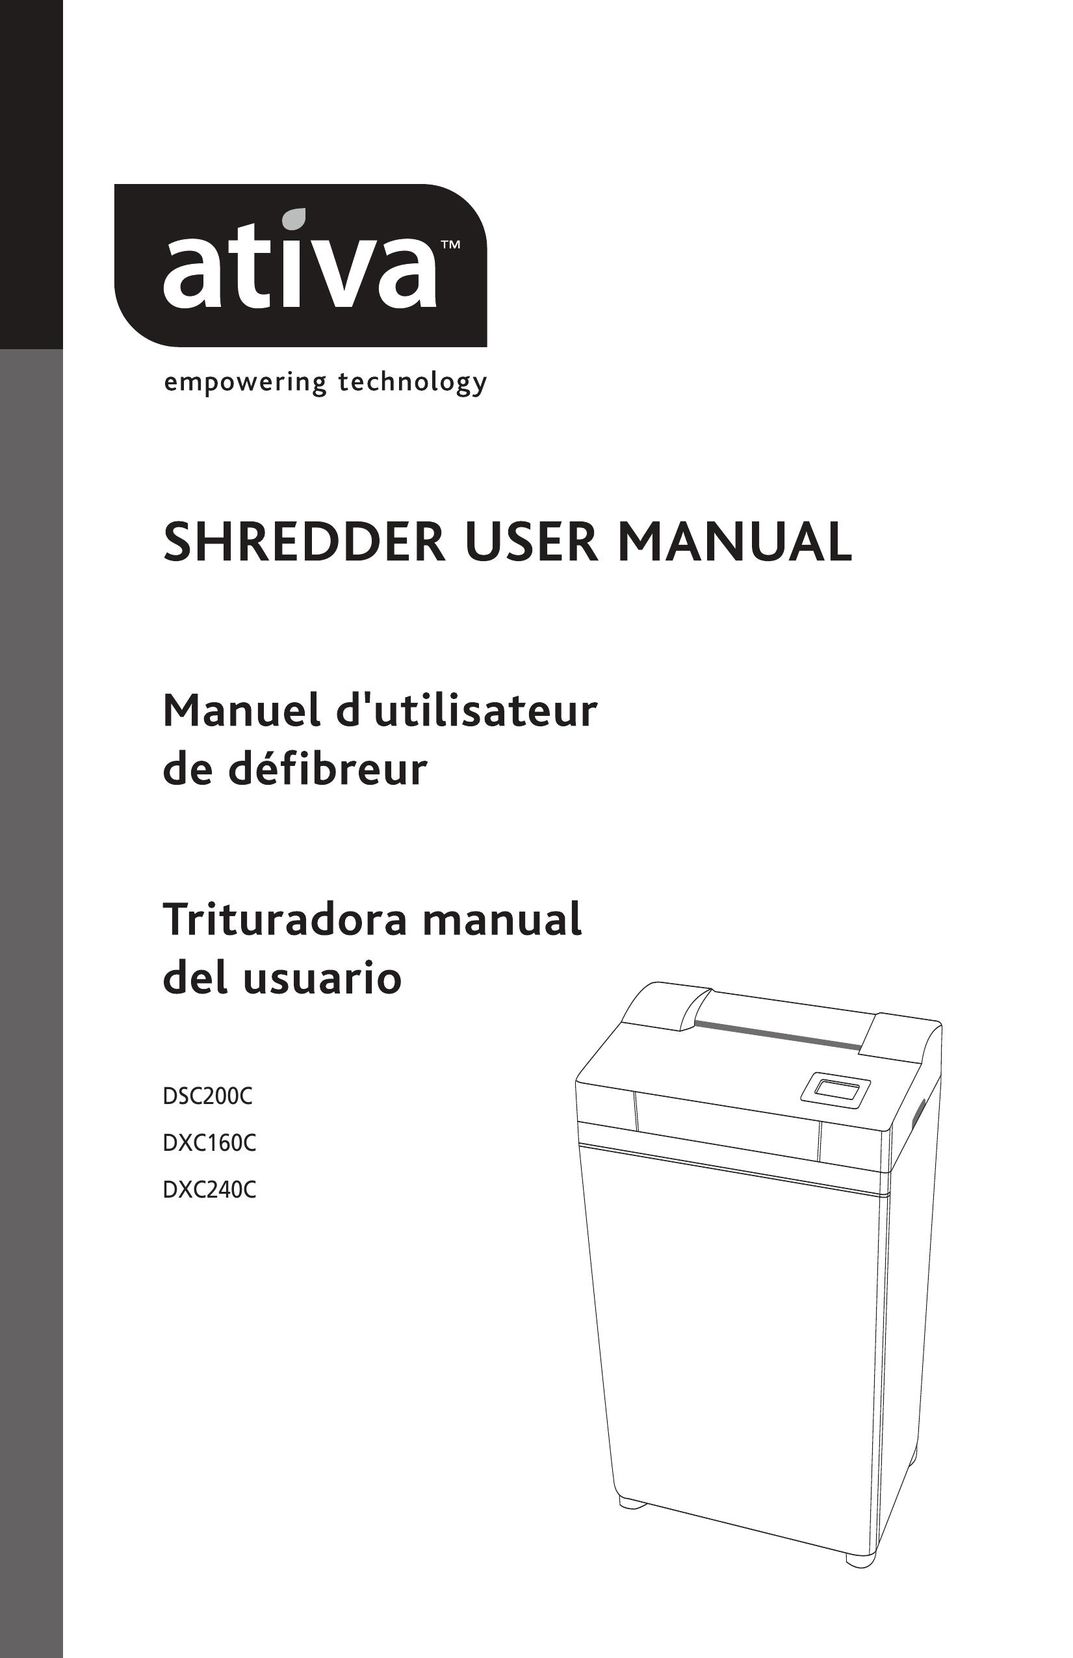 Ativa DXC240C Paper Shredder User Manual